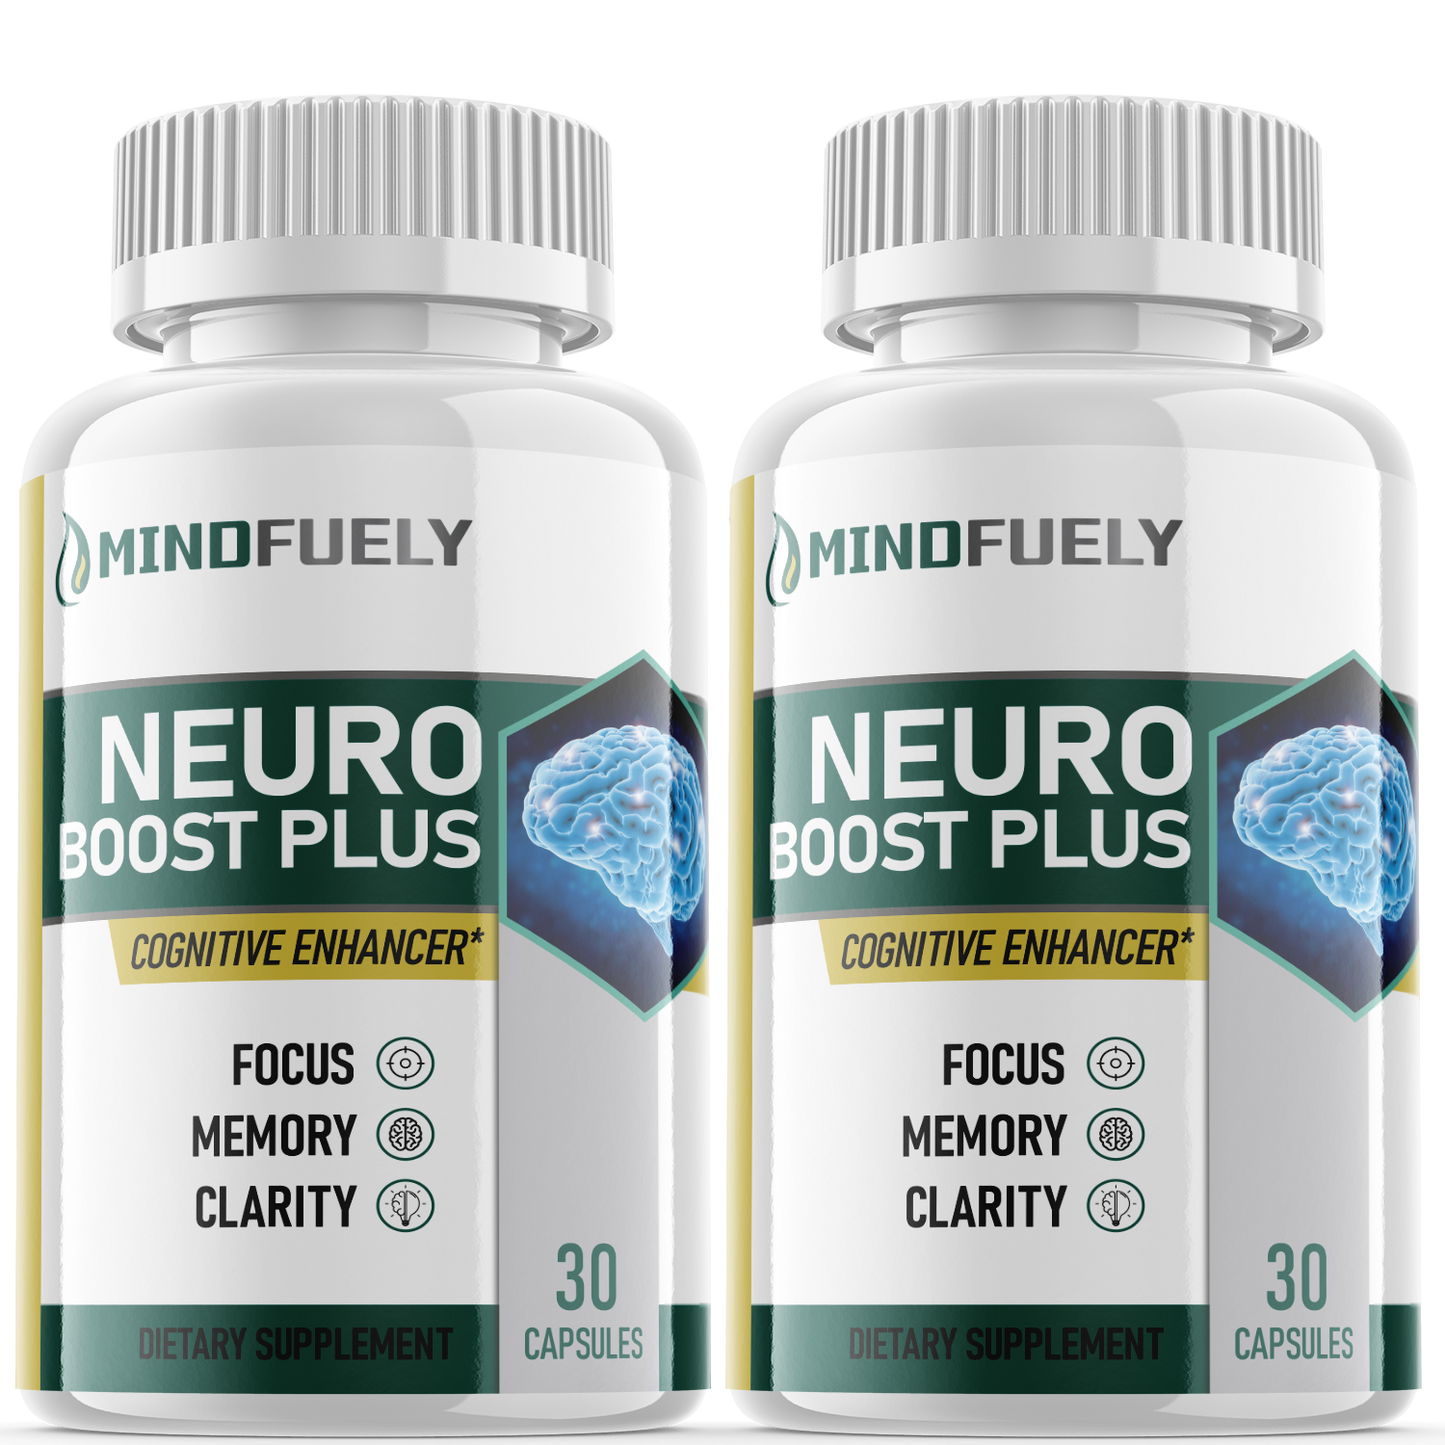 Mindfuely Neuro Boost Pills